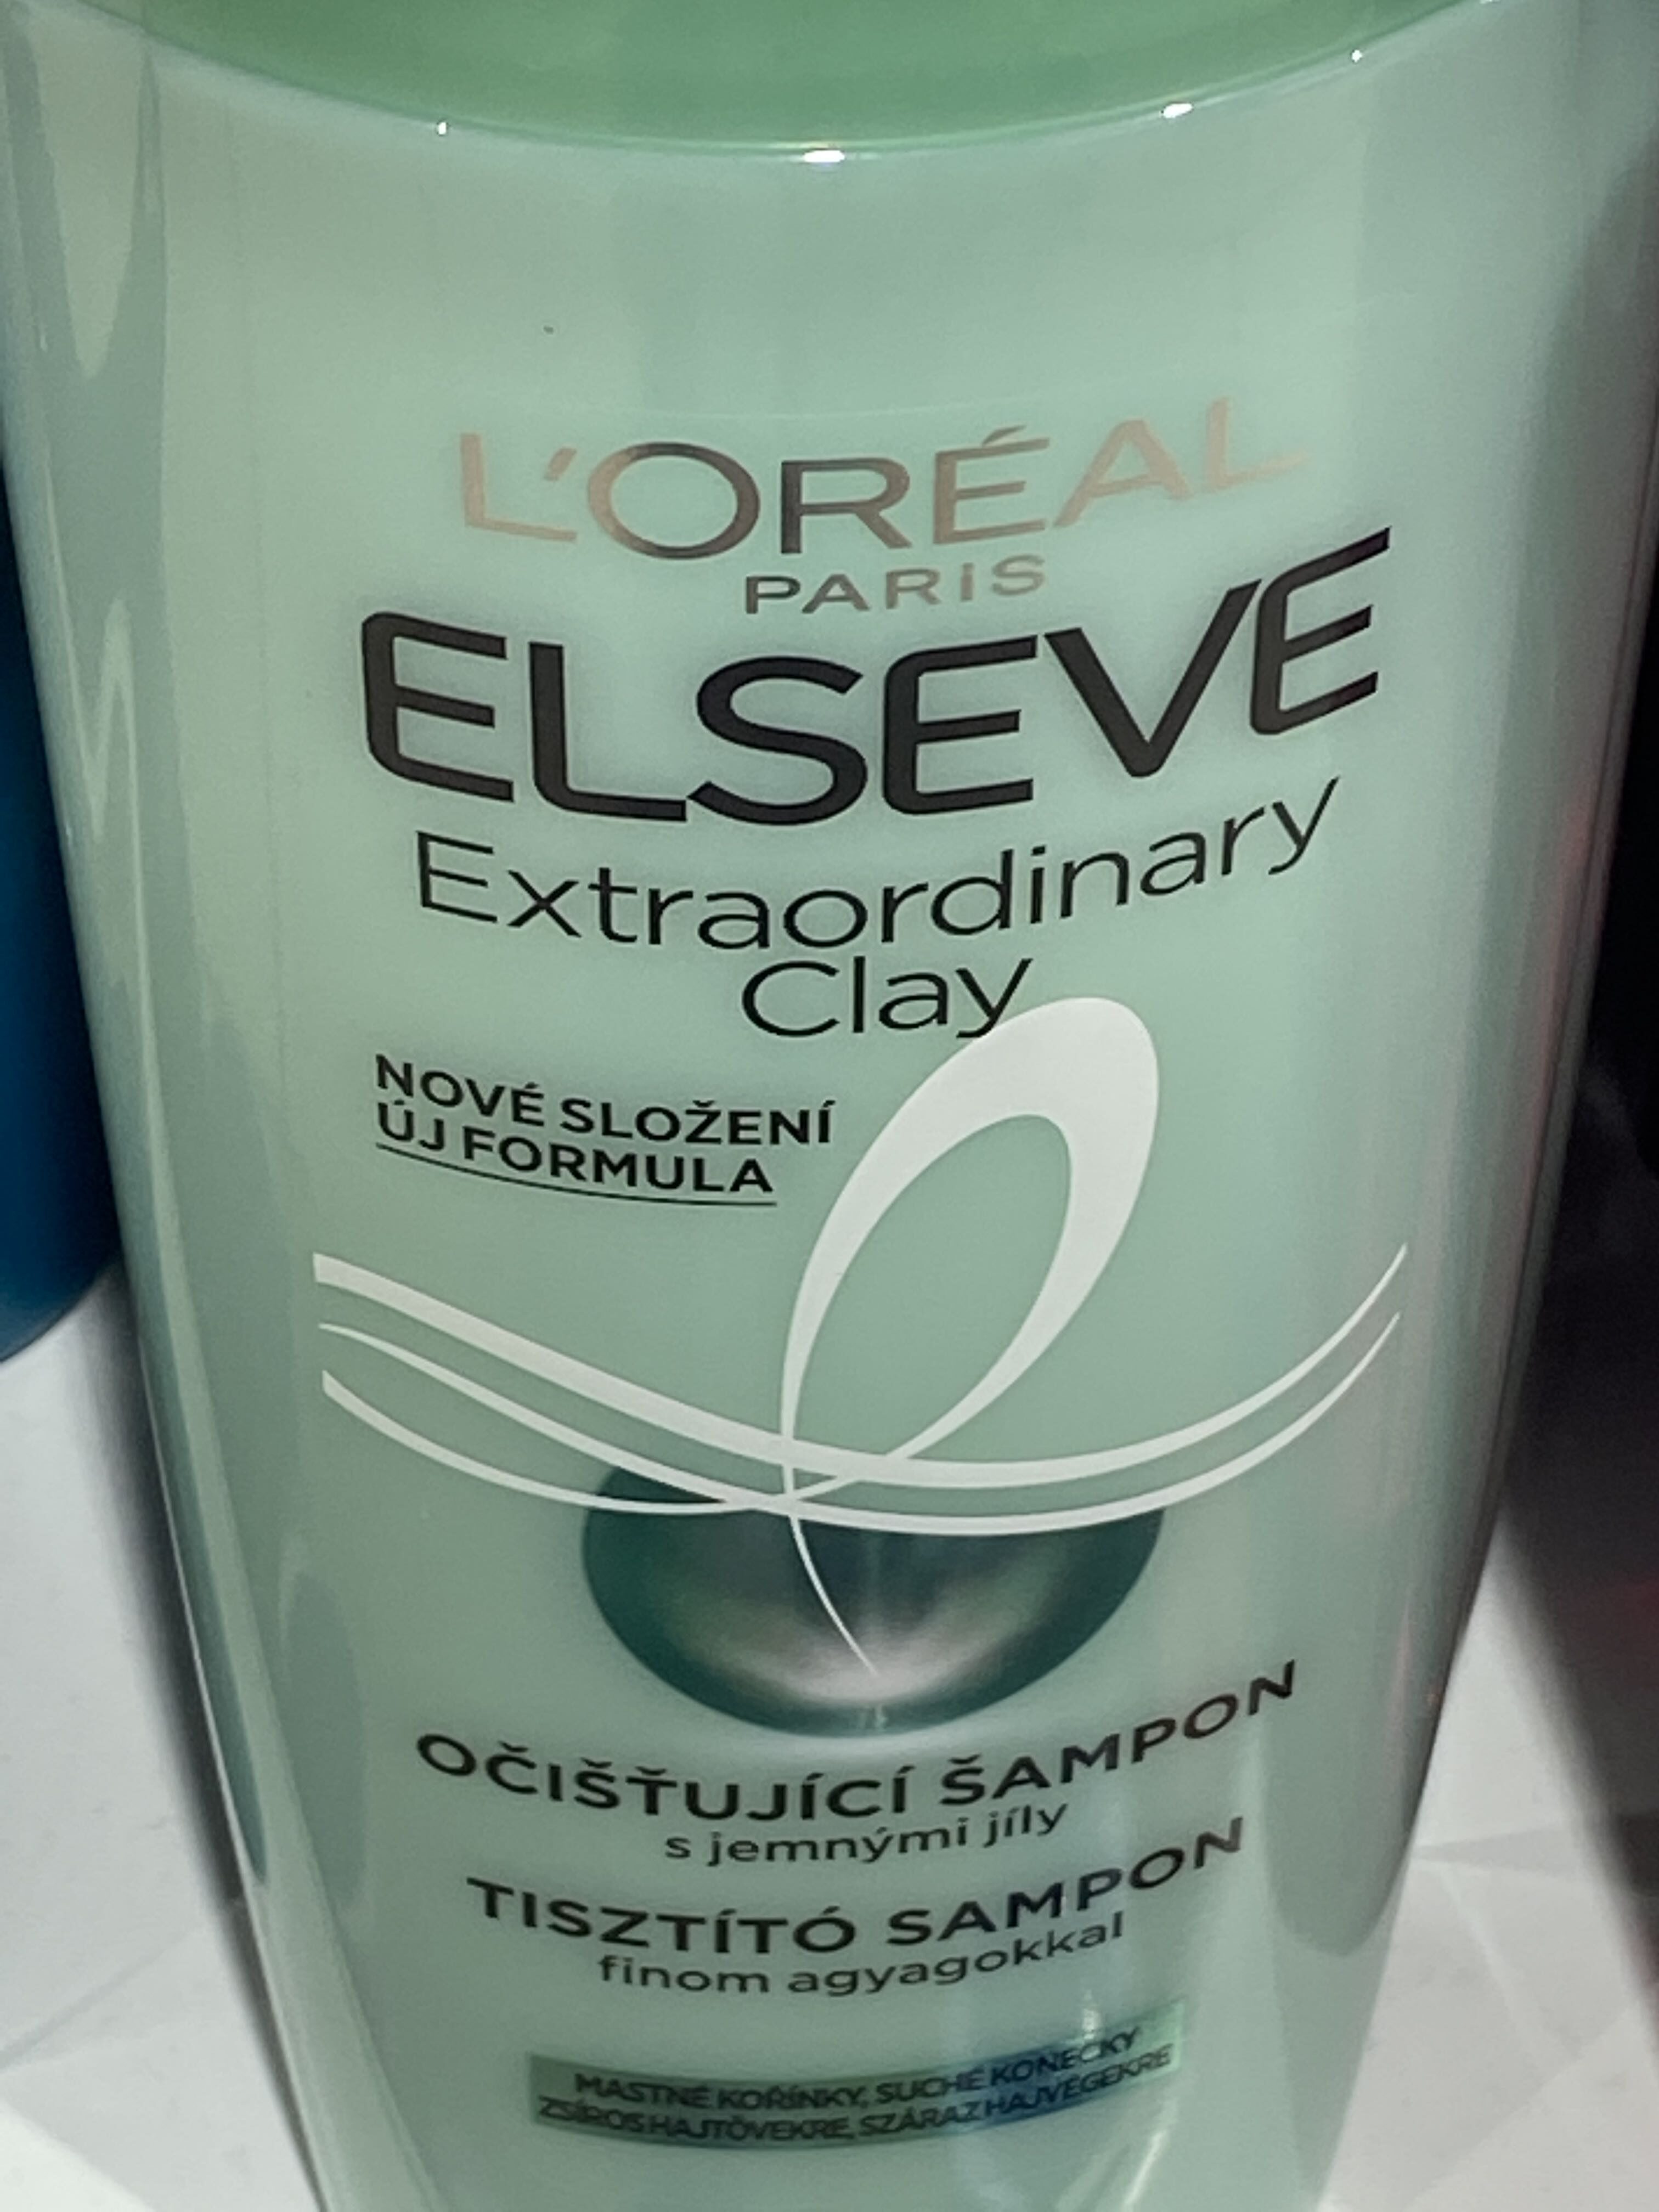 Elseve extraordinary clax - Product - cs